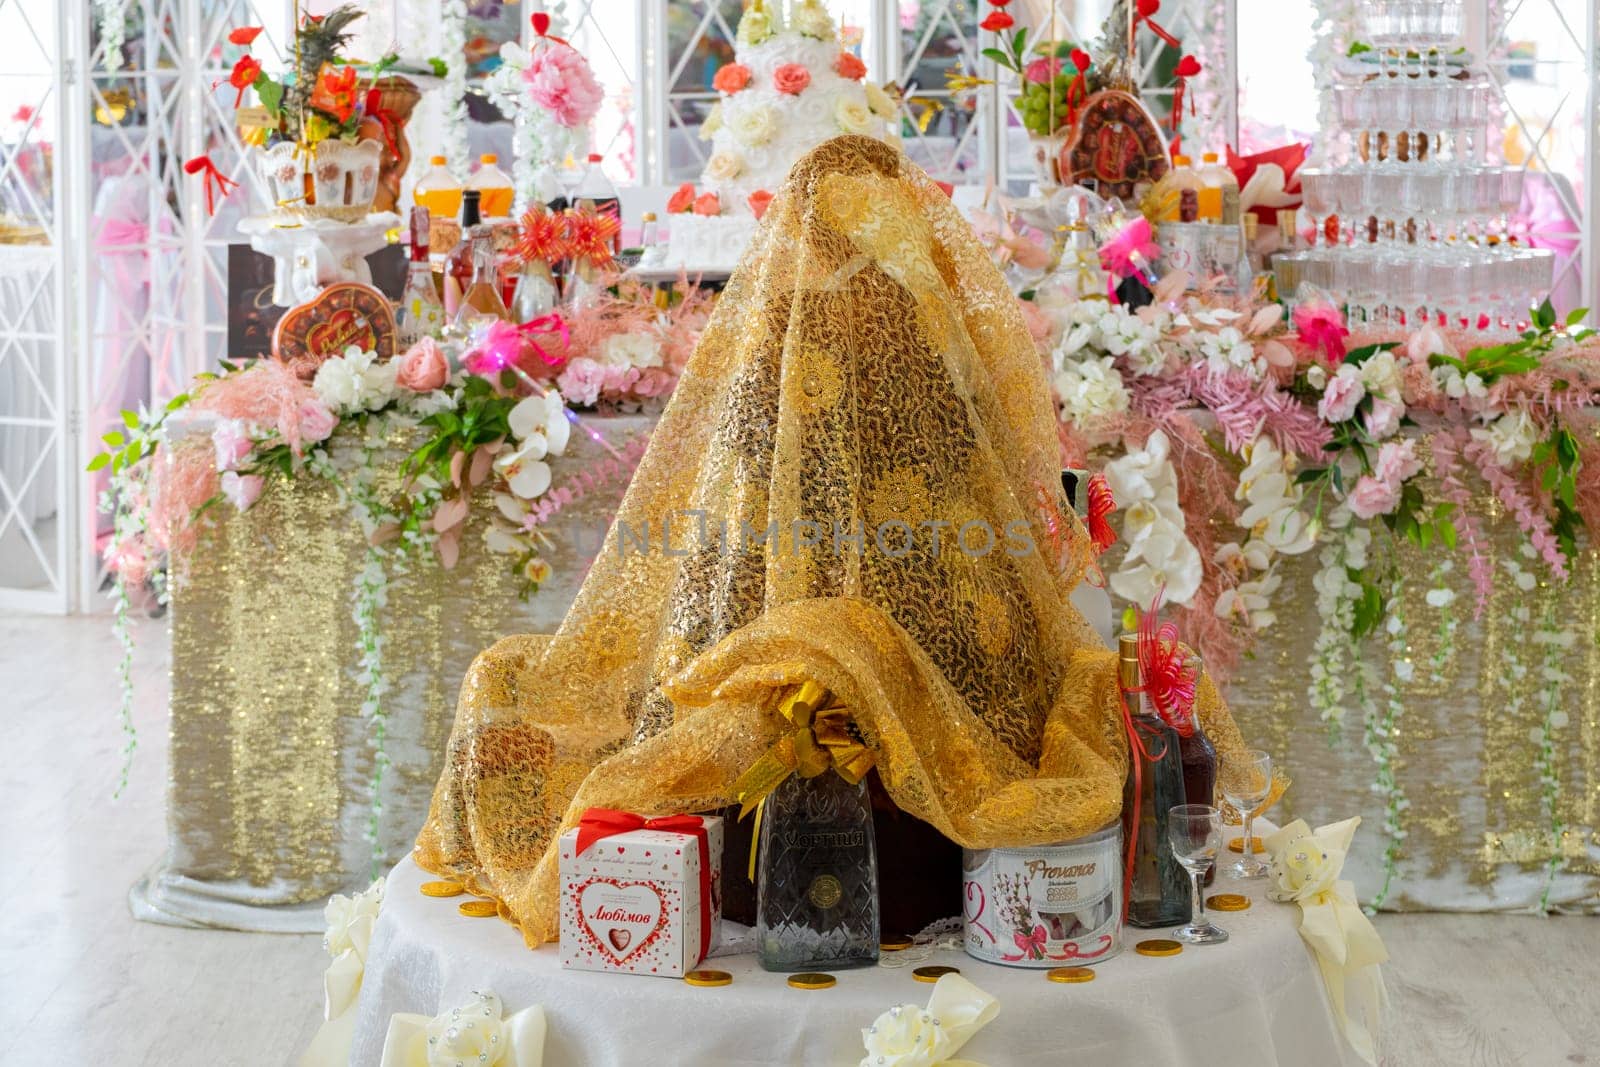 Traditional gifts at a gypsy wedding in Ukraine. Ukraine, Vinnytsia, August 10, 2021